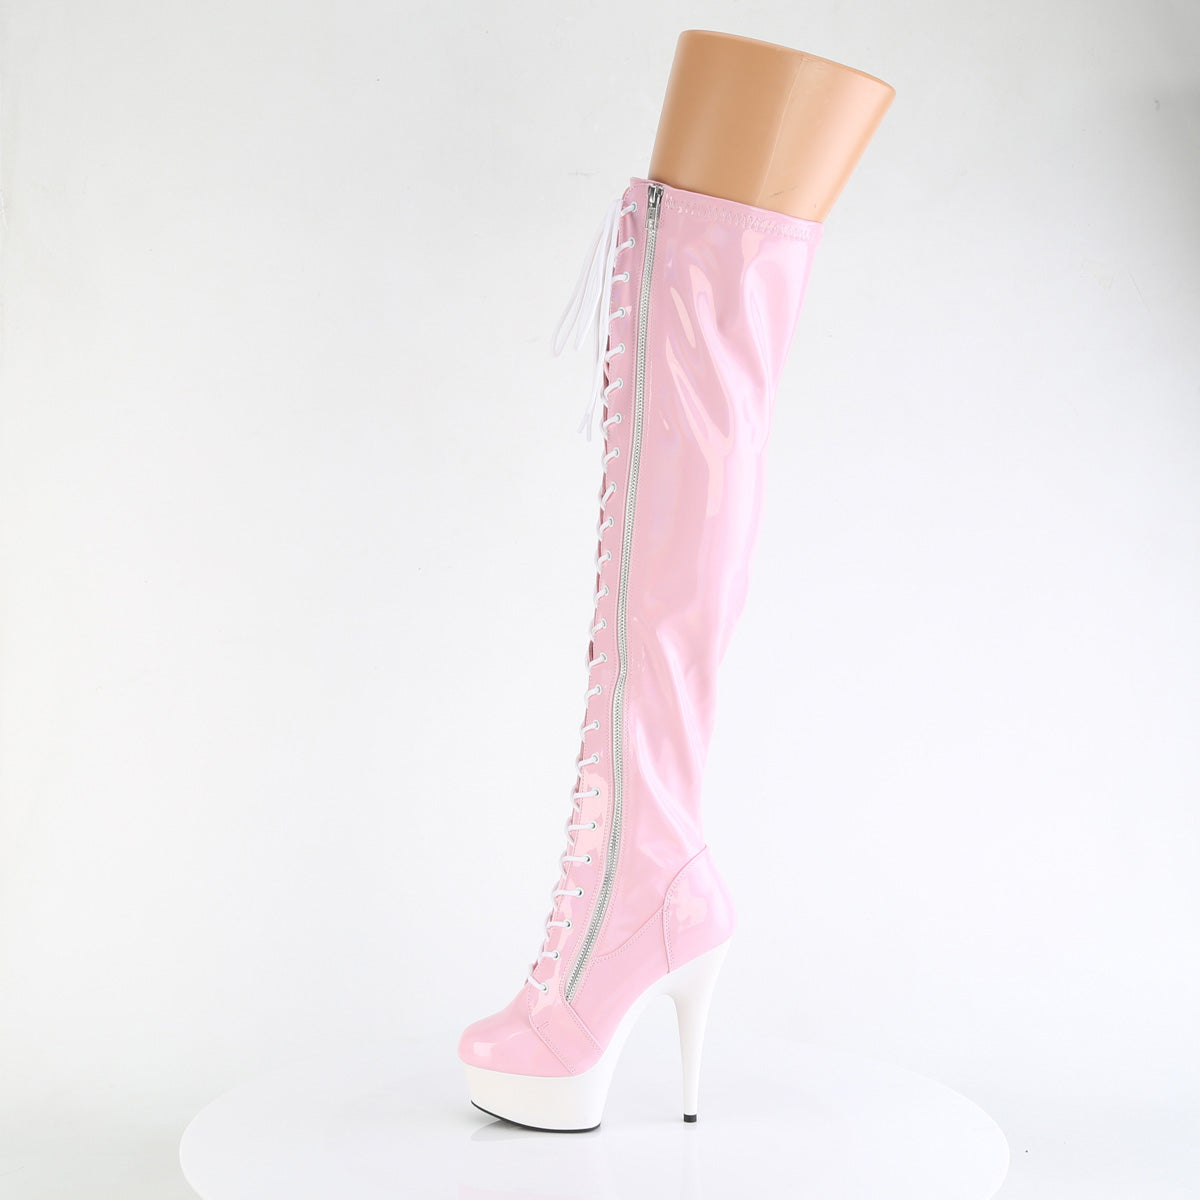 DELIGHT-3029 Stiletto Heel Platform Boots Pink & White Multi view 4